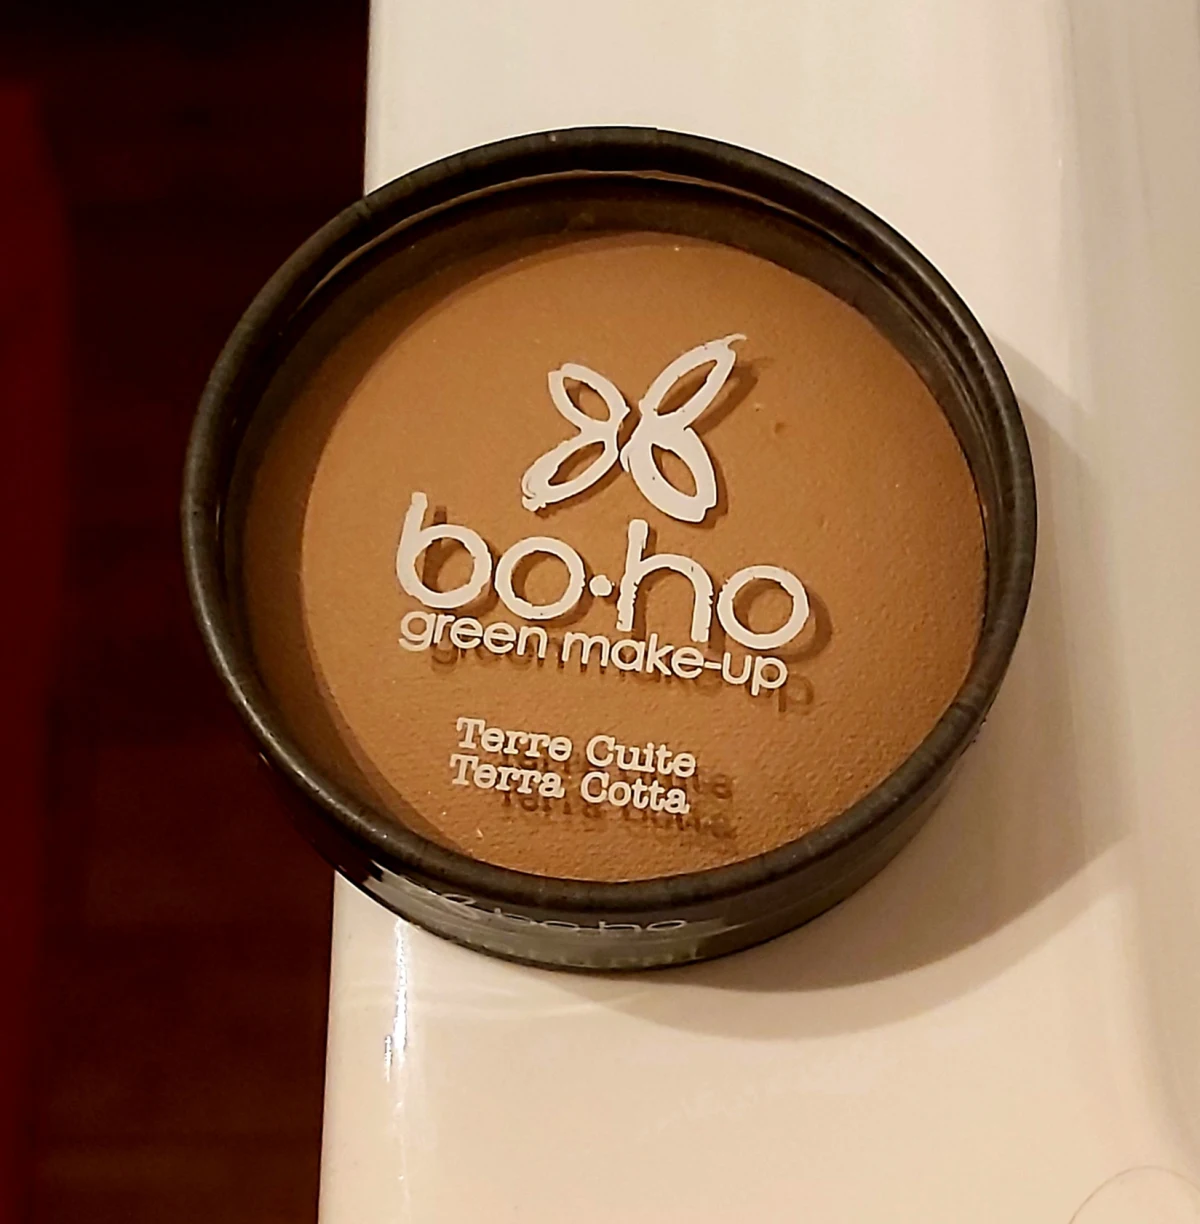 Boho Green Make-Up 09 – Grand Terre Teint Bronzing 9g - review image